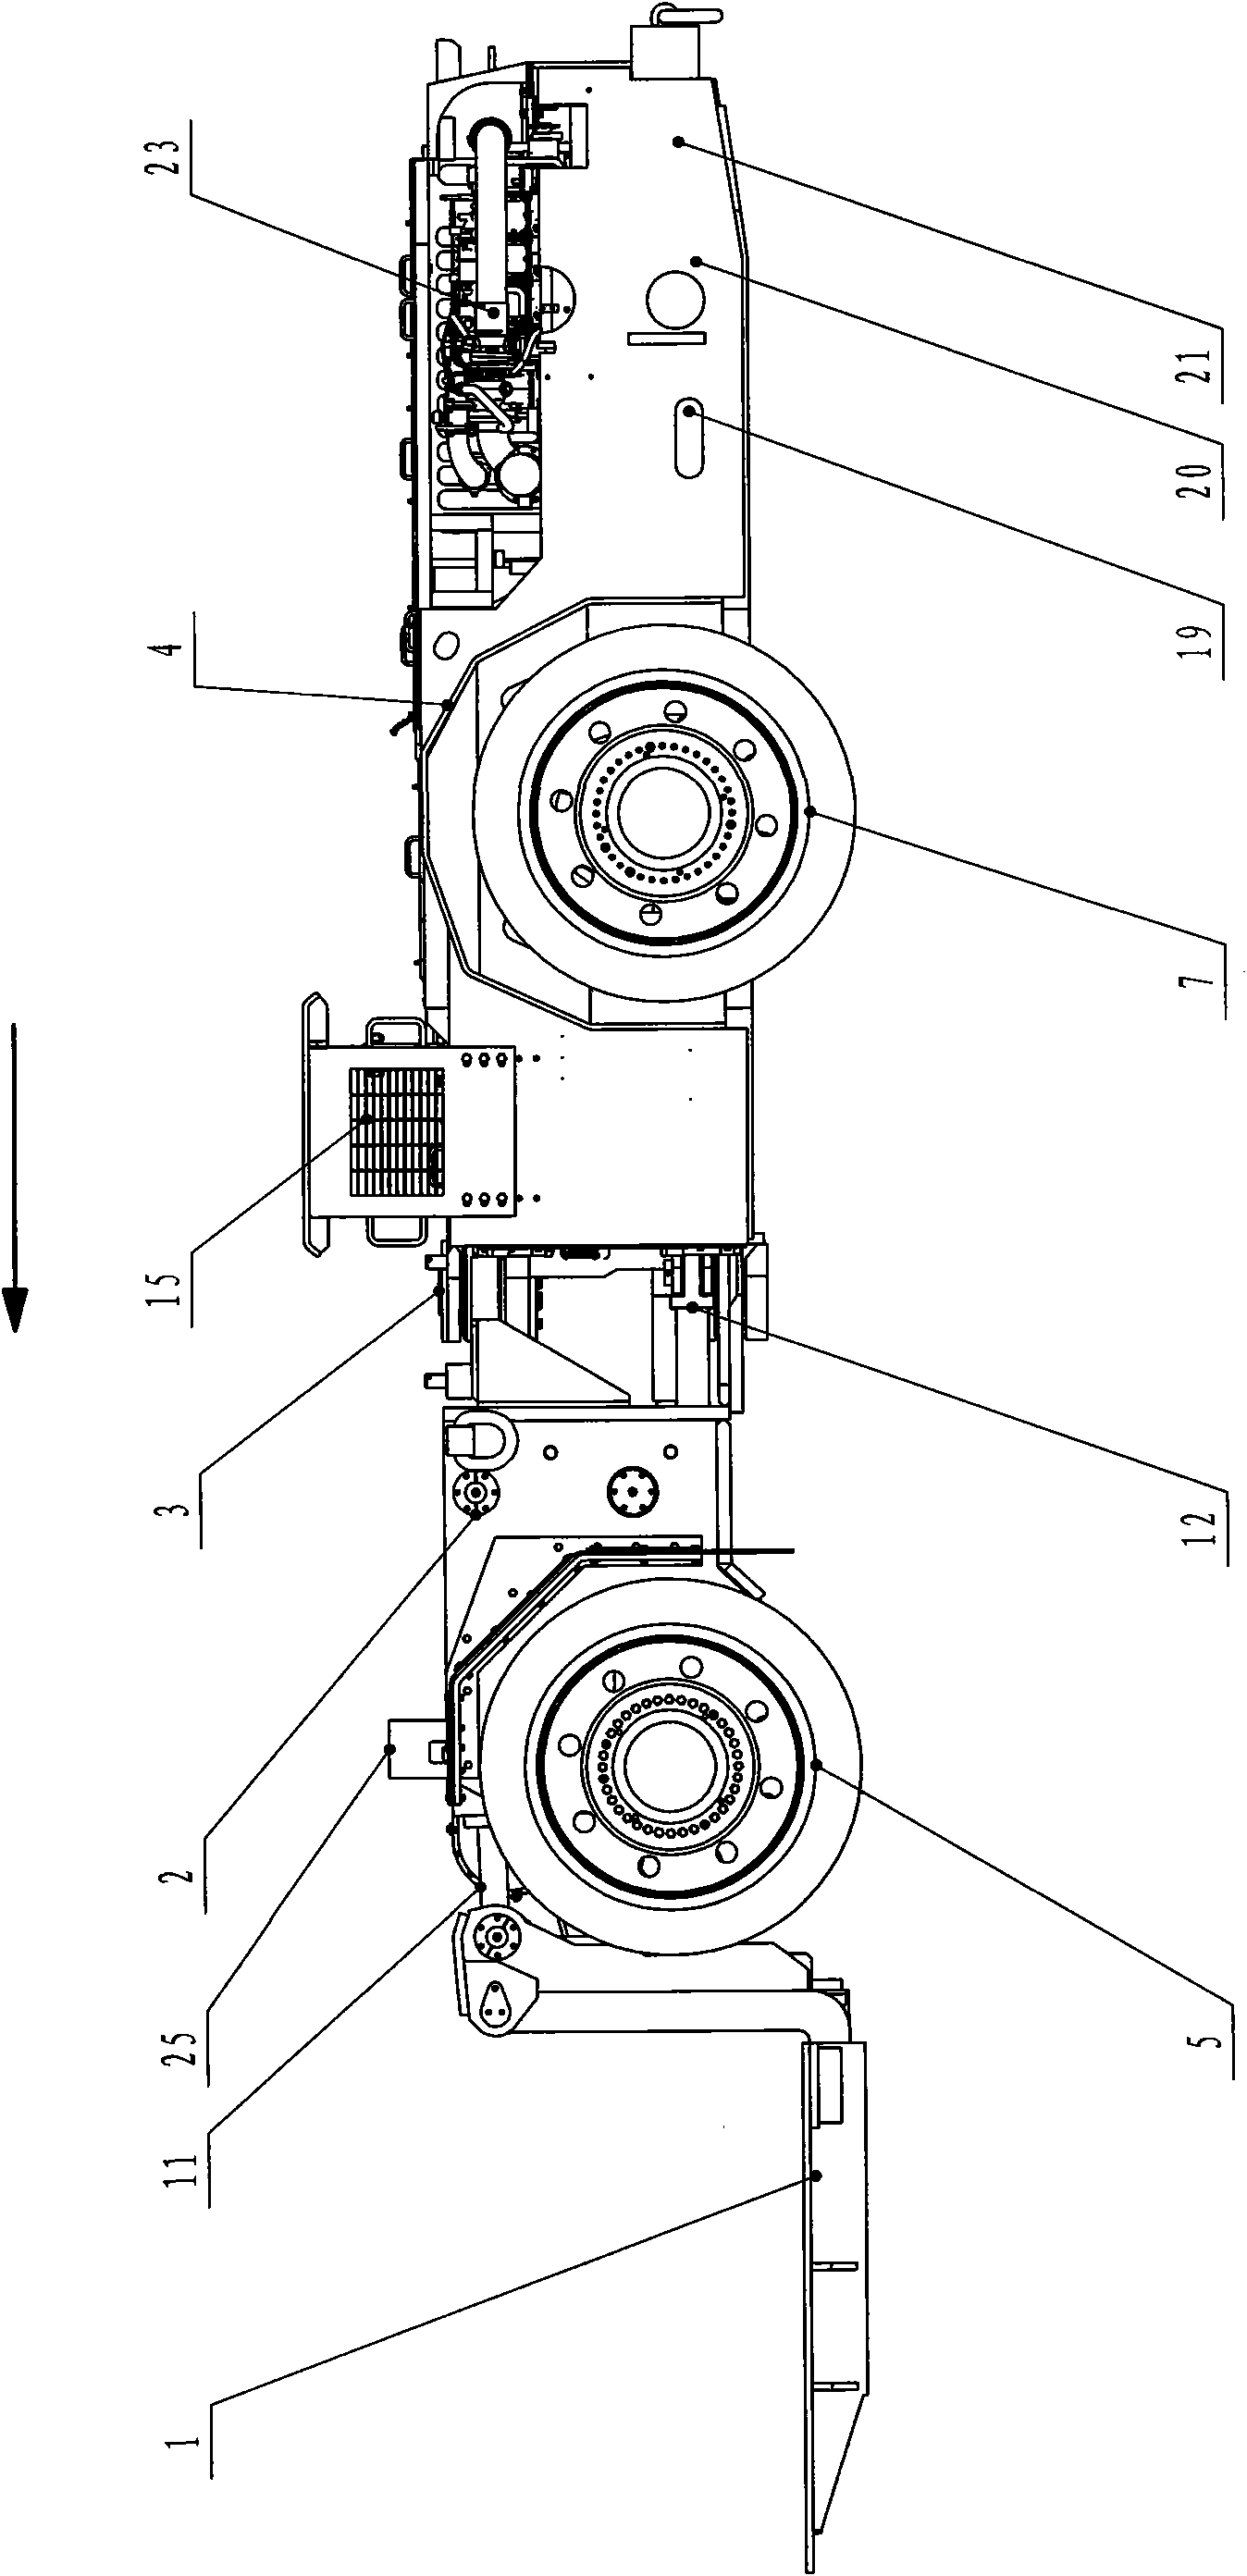 40-tonage scraper type conveyer